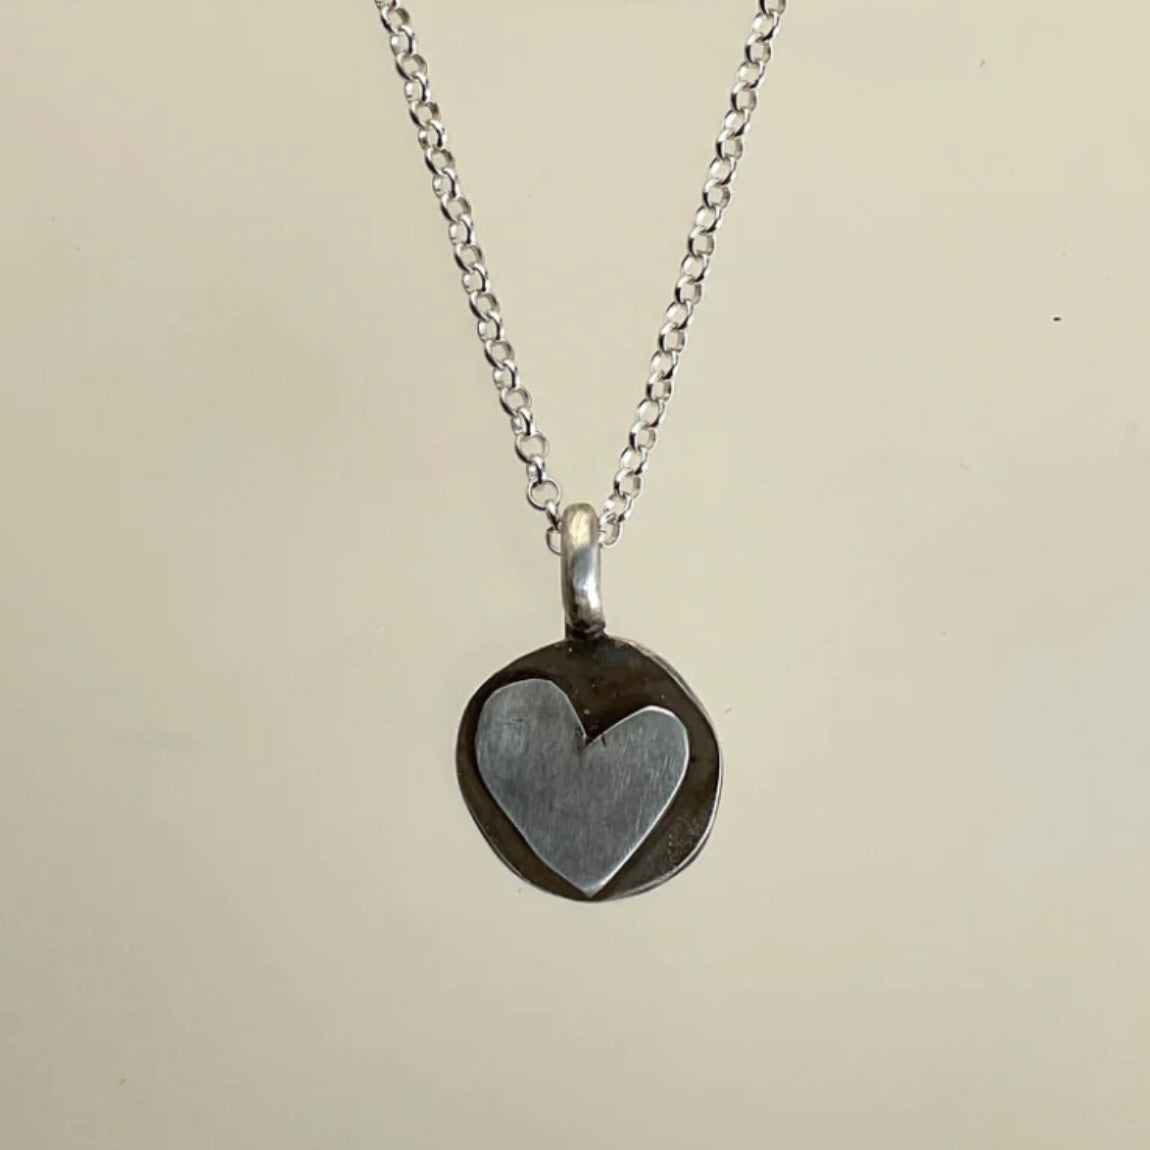 Heart pendant small / medium